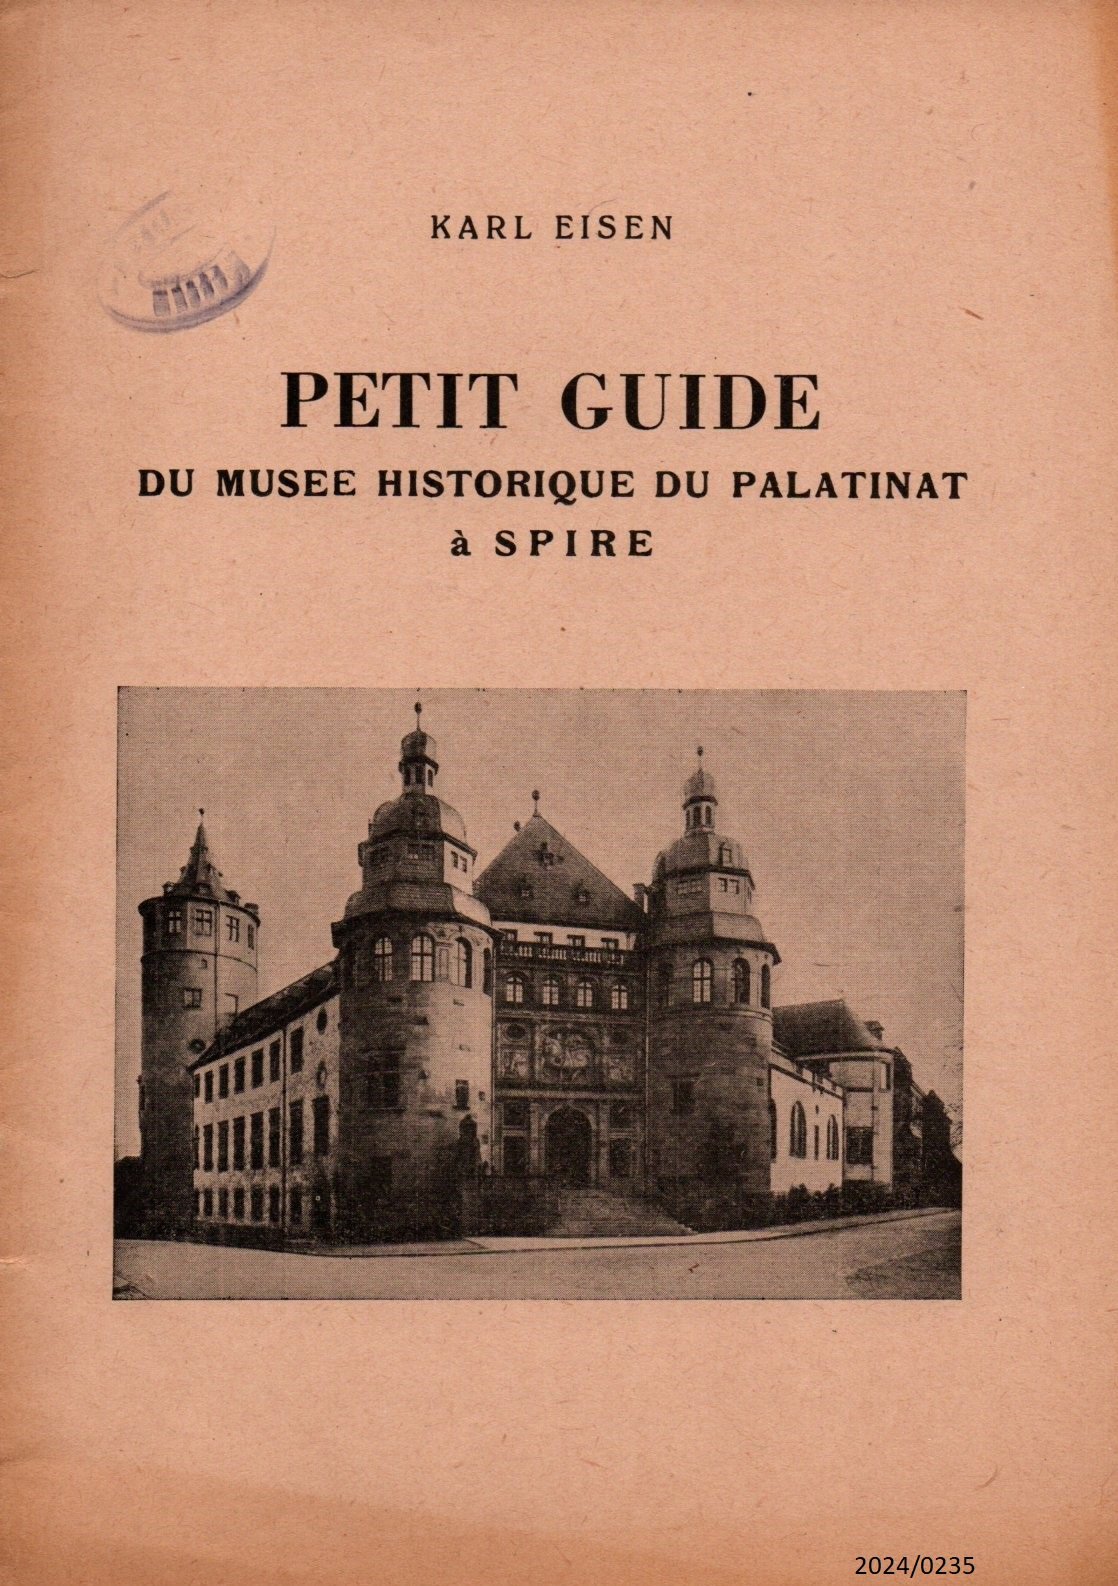 "Petit guide du musée historique du Palatinat a Spire" von Karl Eisen 1947 (Stadtmuseum Bad Dürkheim im Kulturzentrum Haus Catoir CC BY-NC-SA)